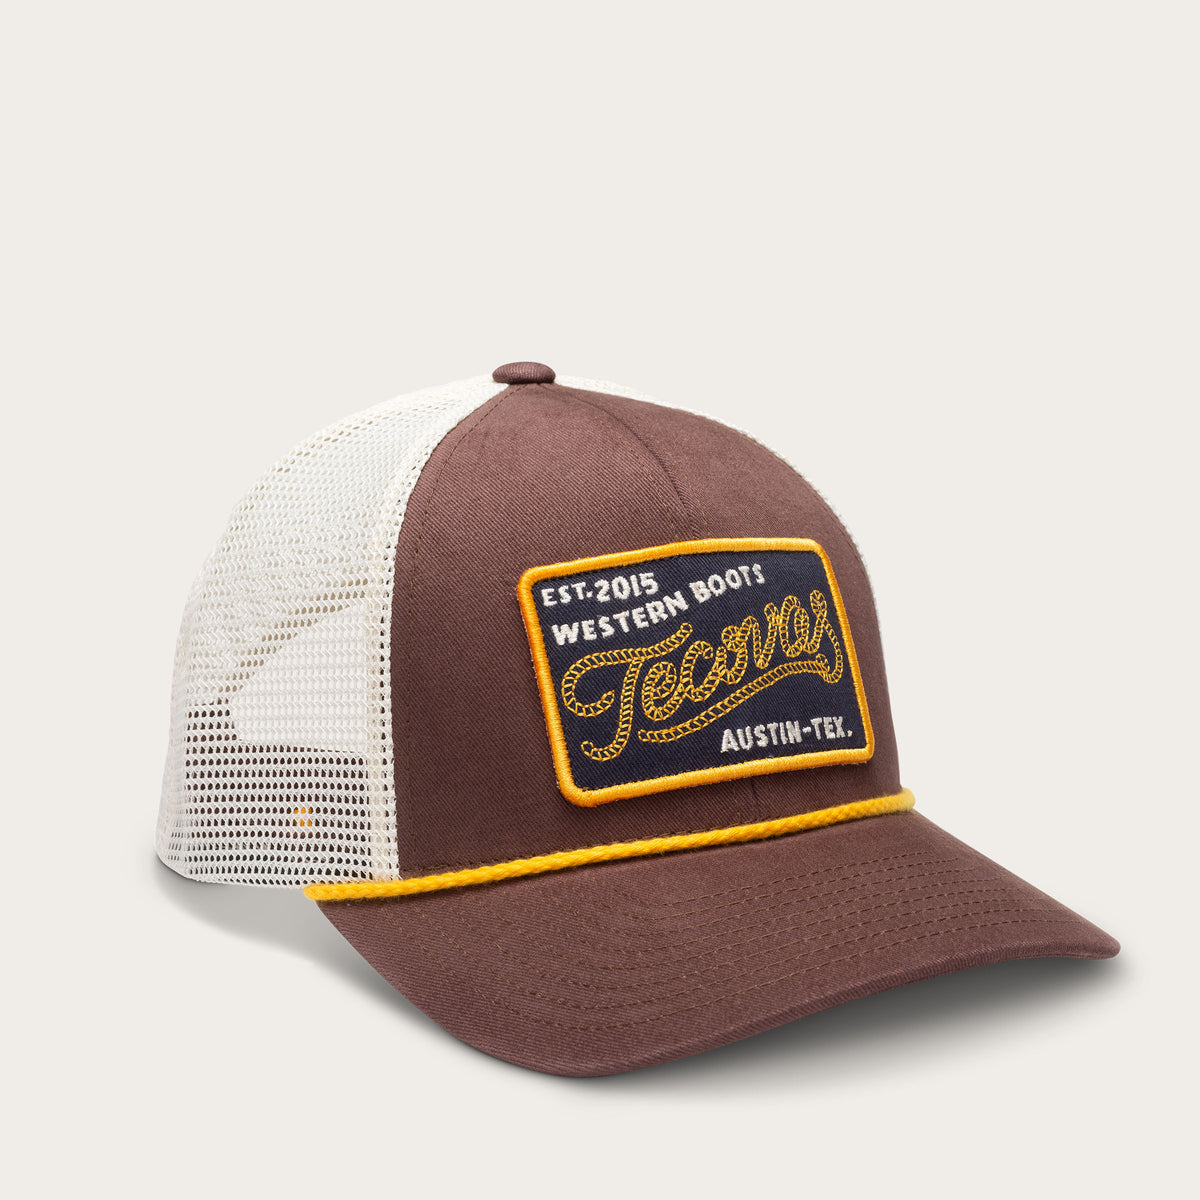 Men's Trucker Hats - Tecovas 